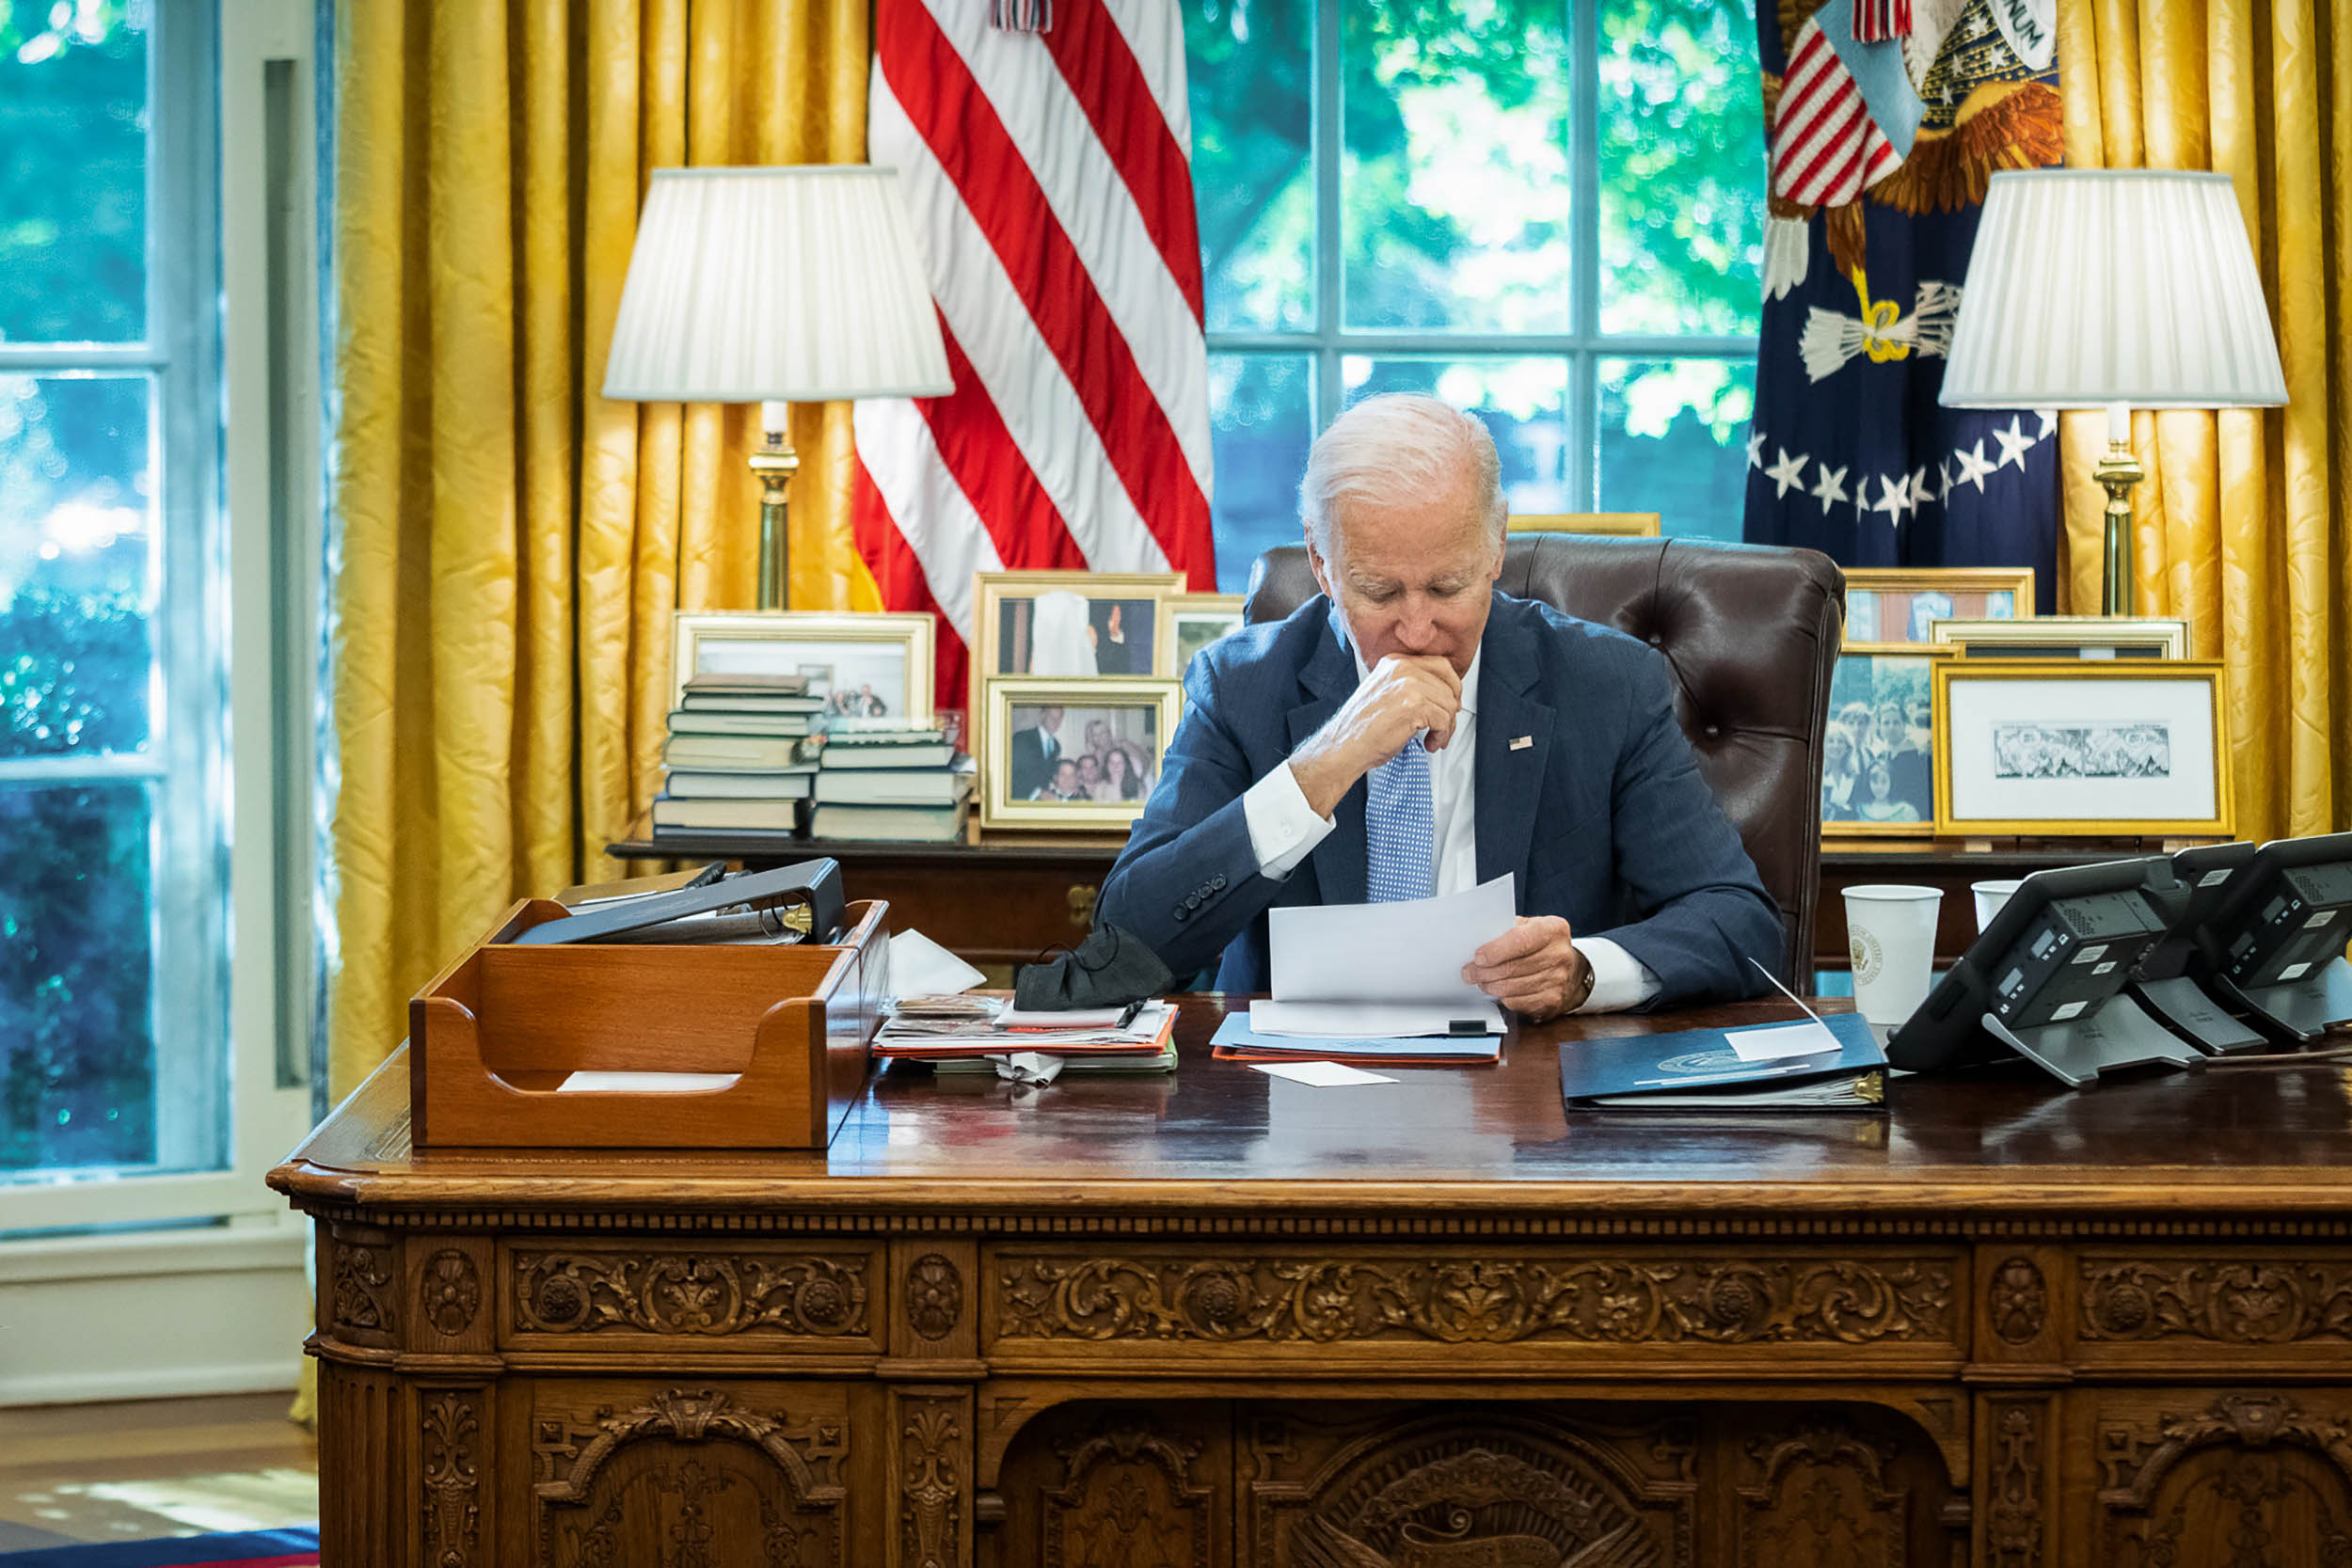 Free Nations League sends letter to President Joe Biden